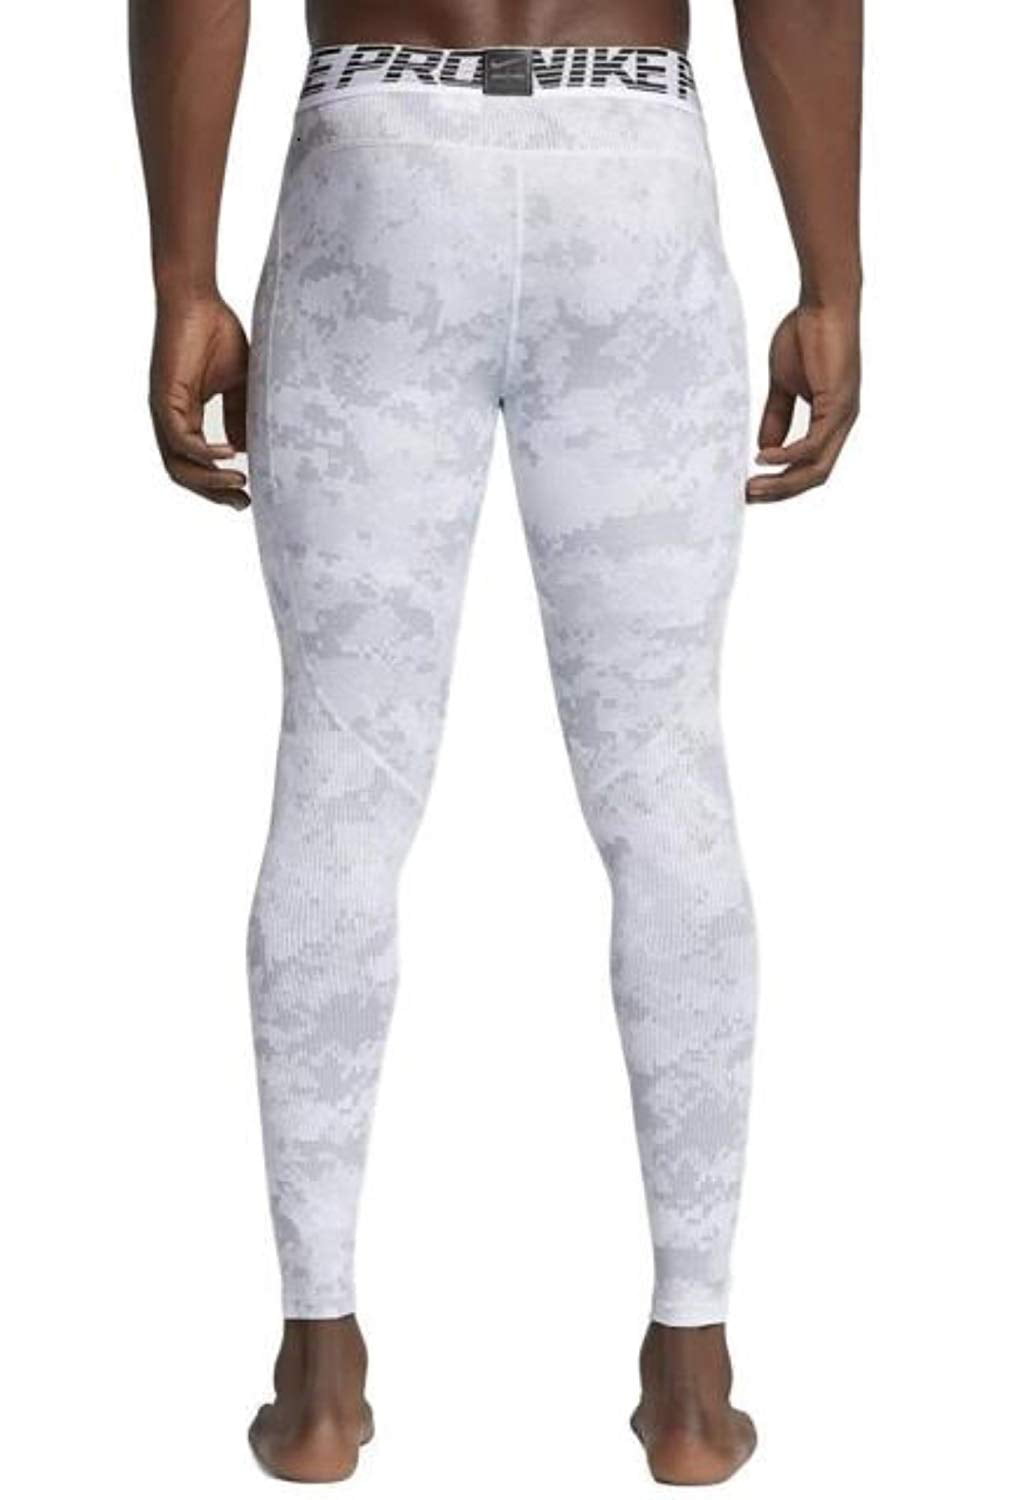 Pro Hypercool Digital Camo Compression Tight Pants White/Black (White,L) - Walmart.com